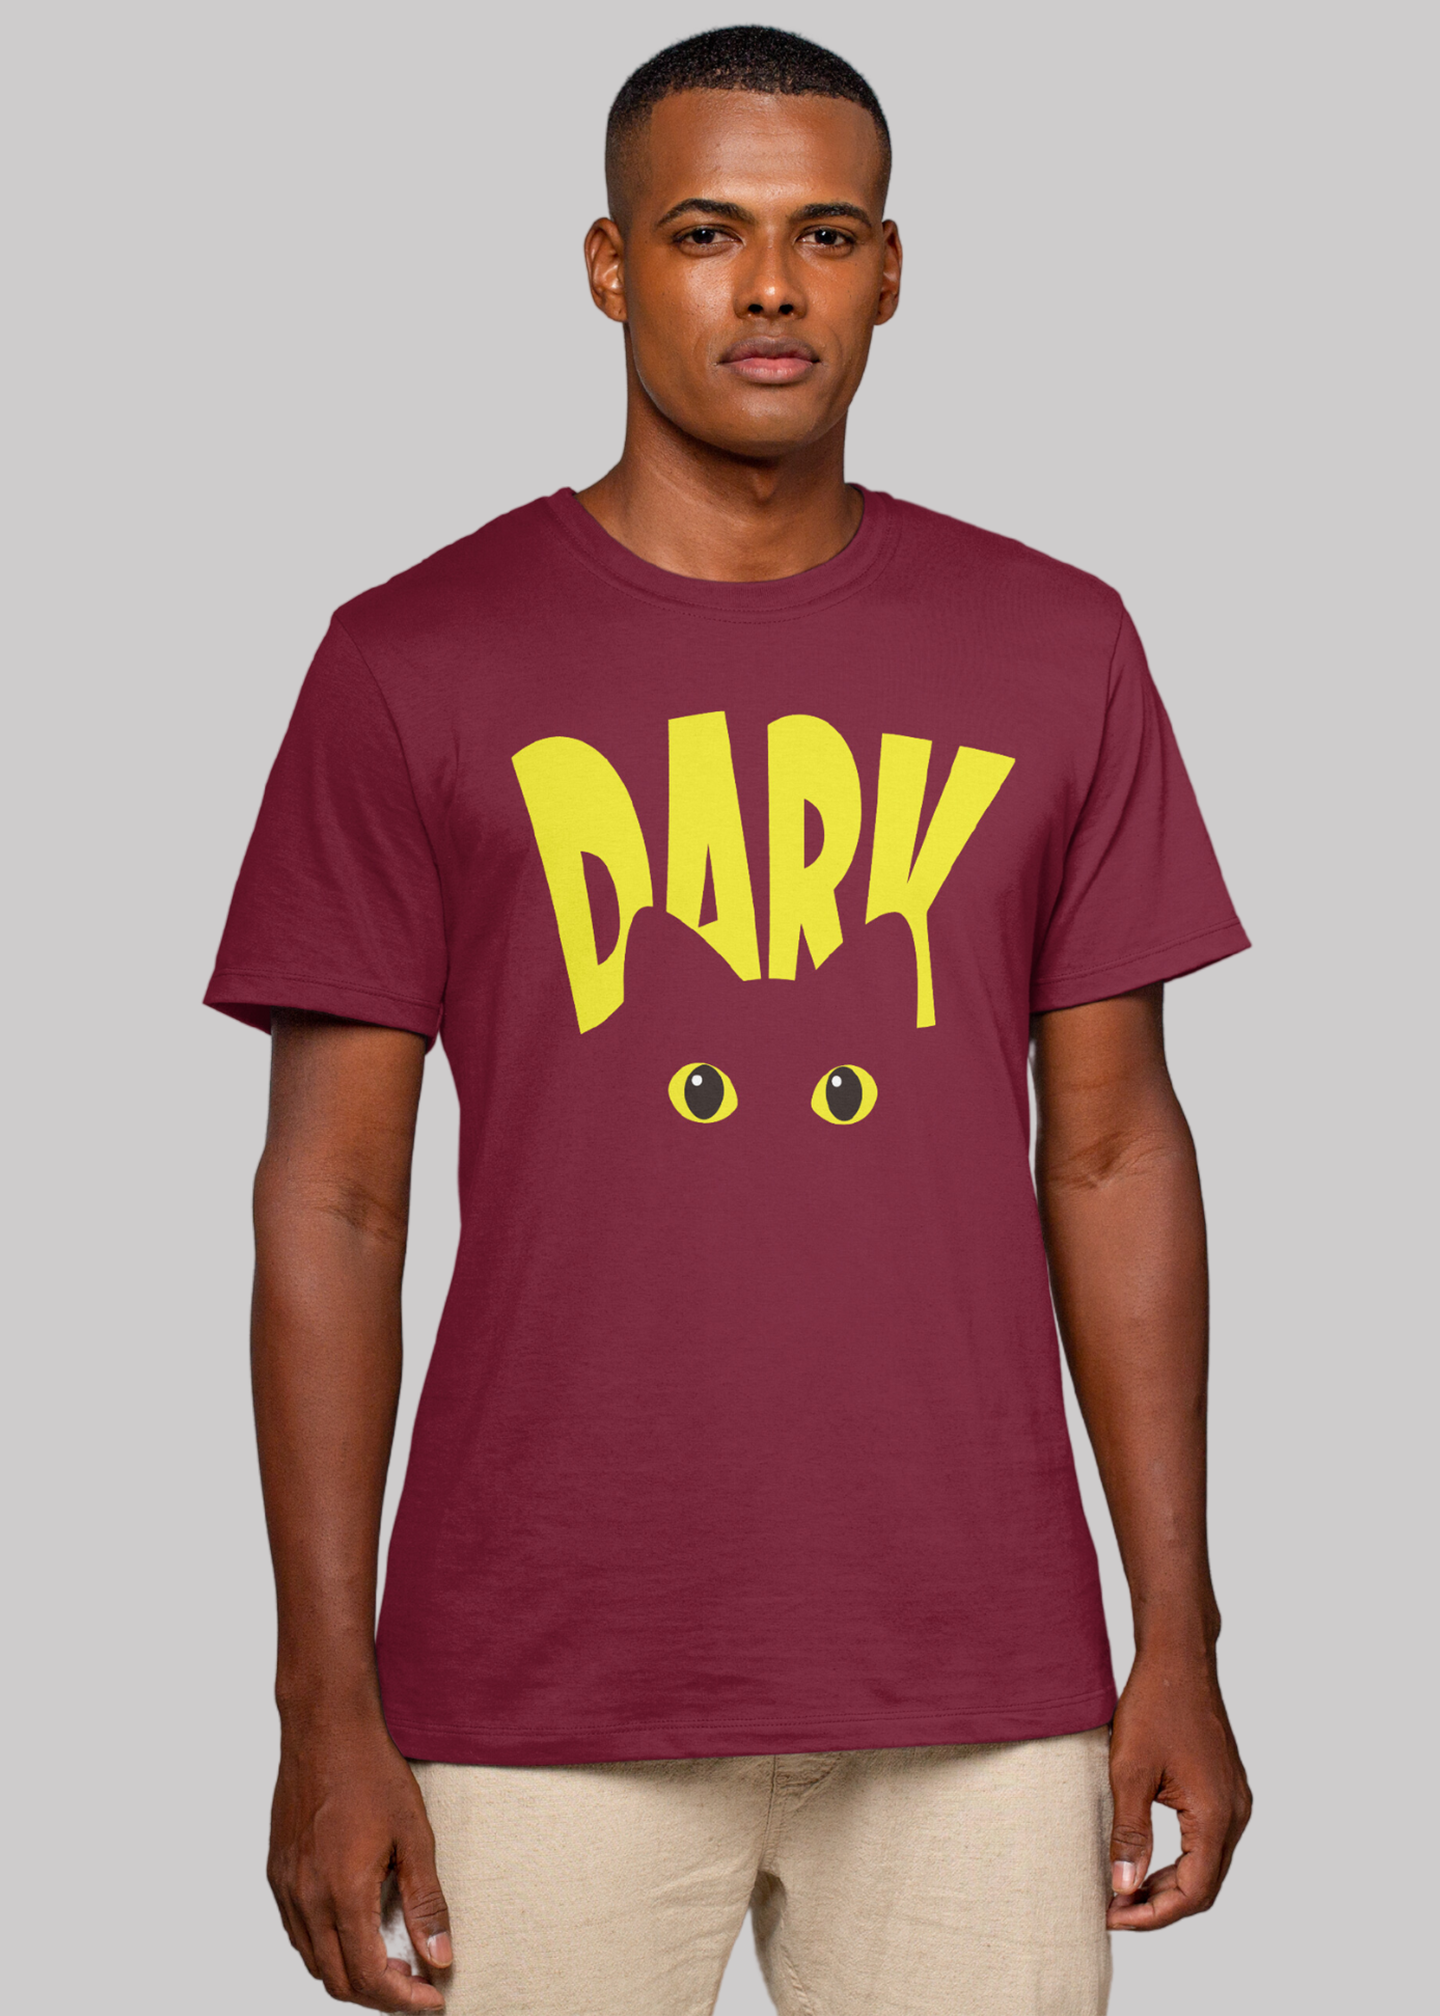 Dark cat Printed Half Sleeve Premium Cotton T-shirt For Men